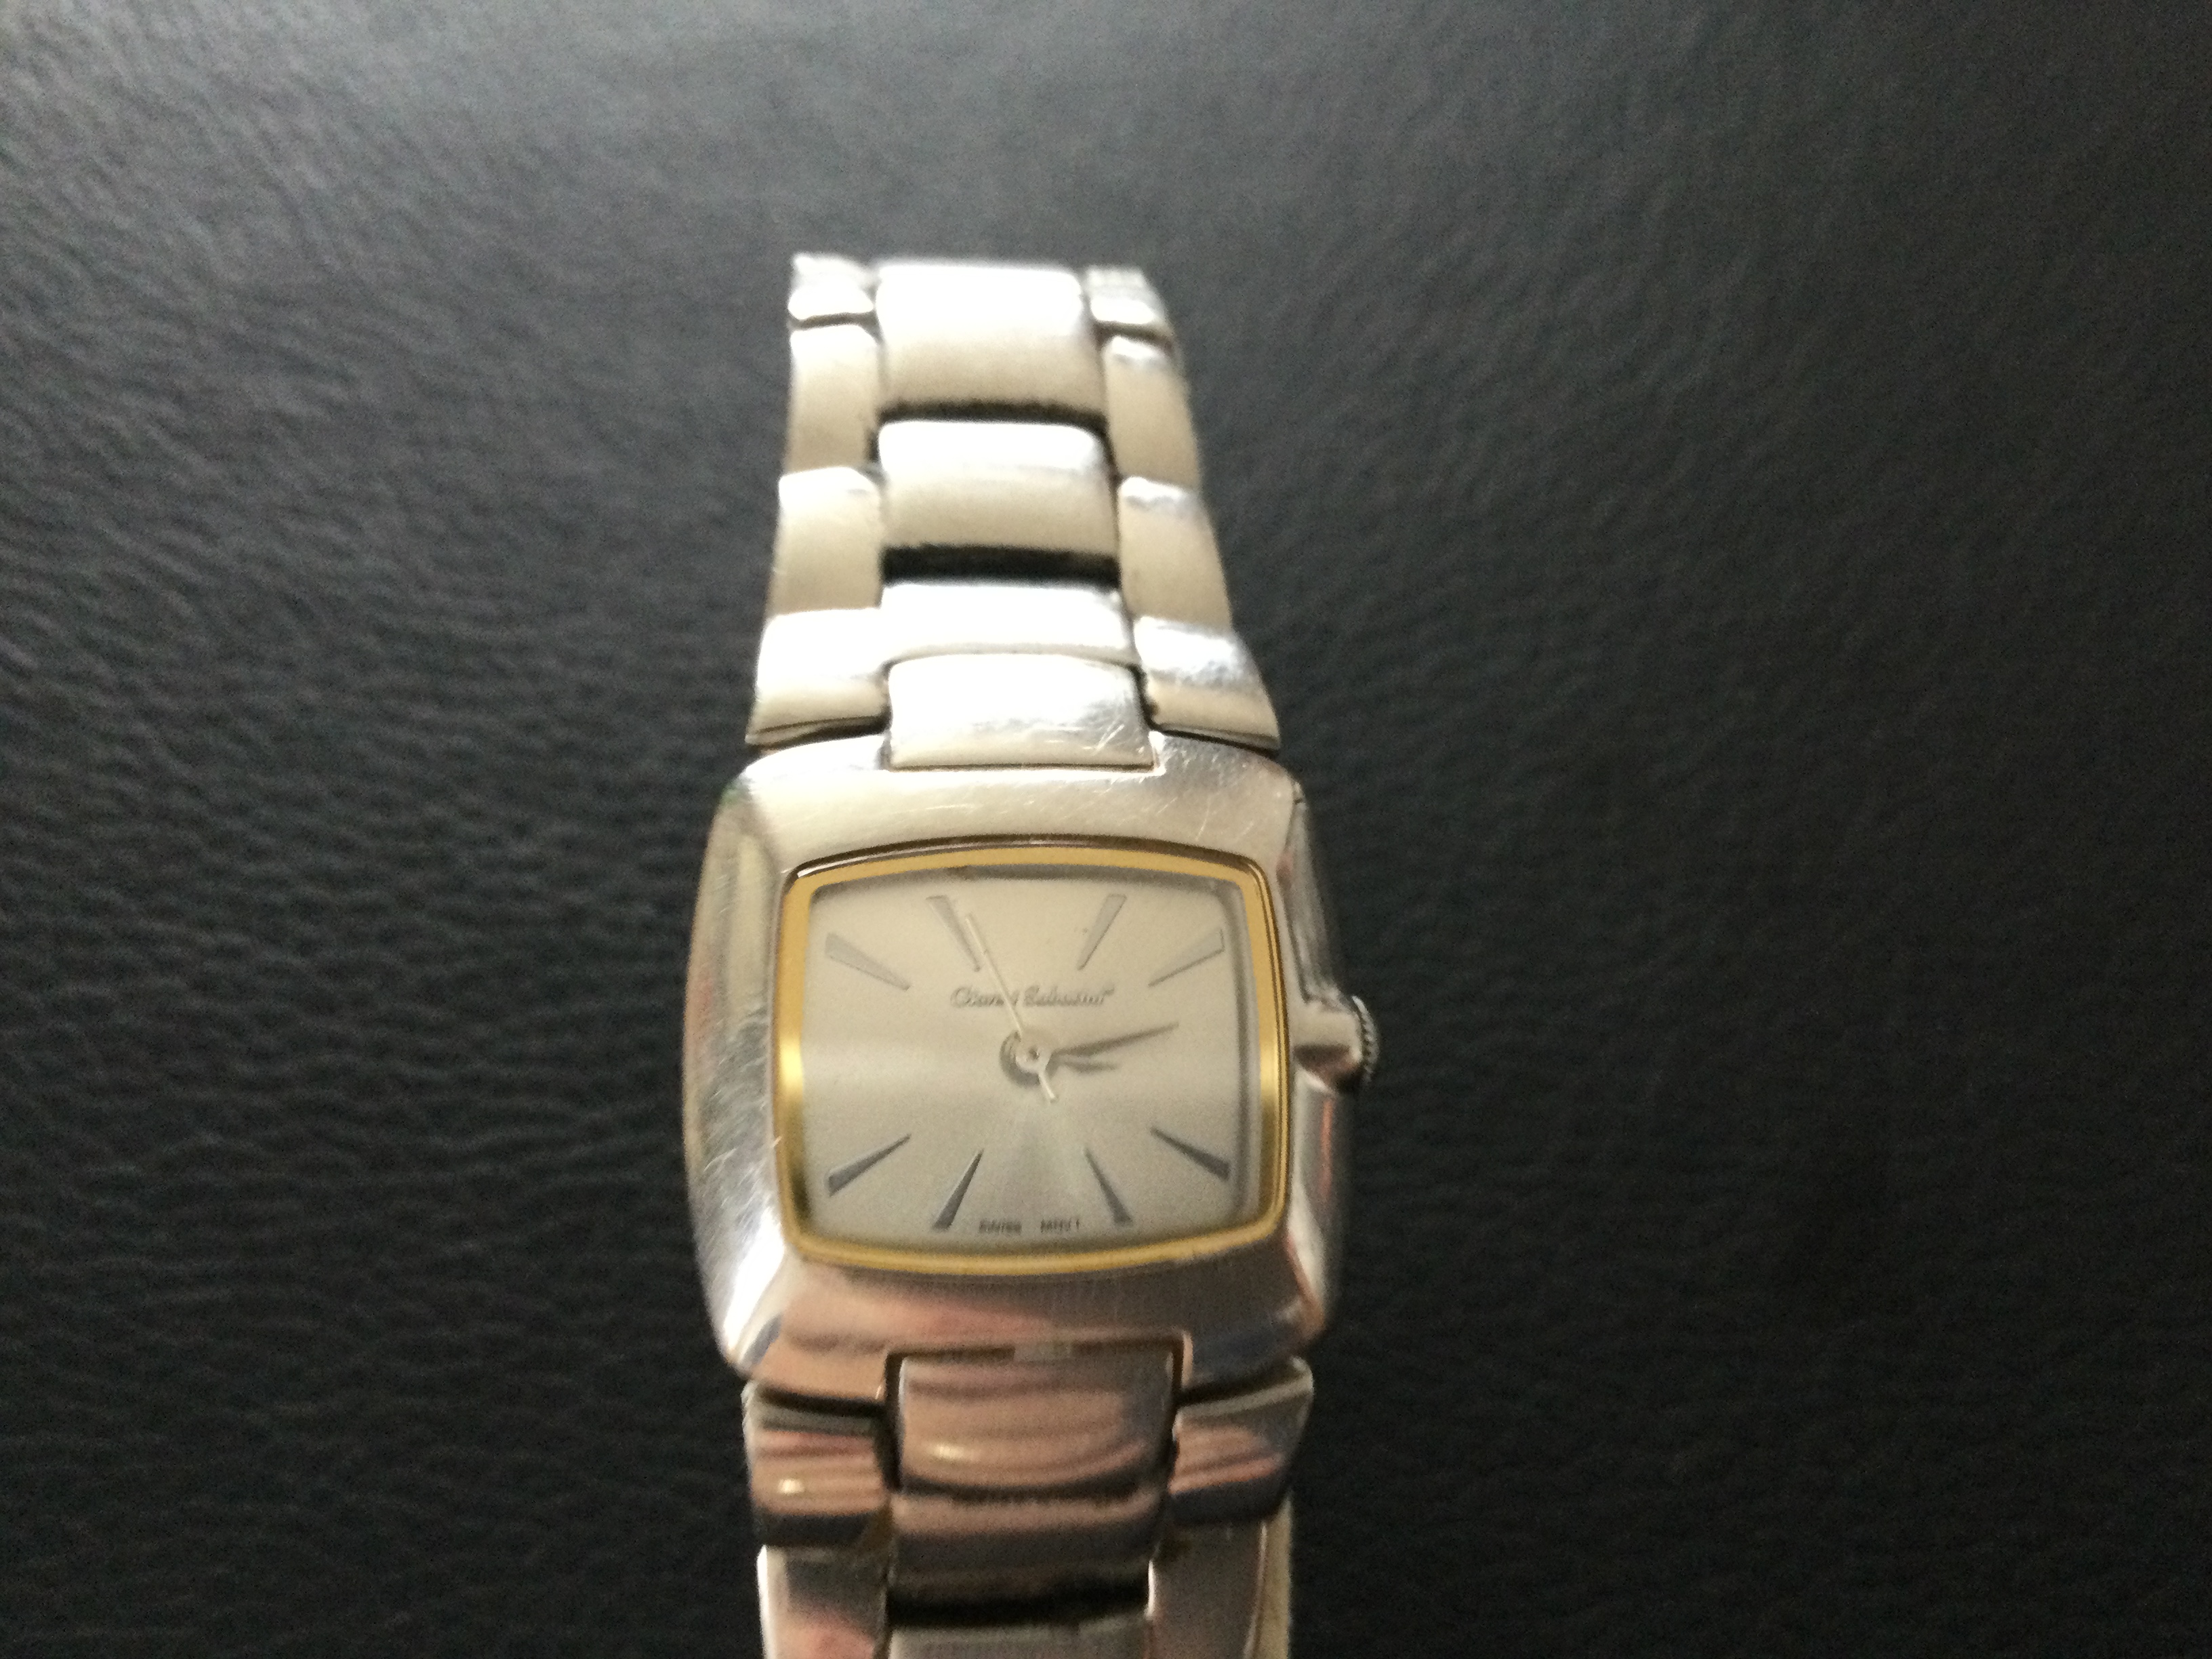 Beautiful Gianni Sabatini Sapphire Crystal Quartz Wristwatch (GS 129) A beautiful Ladies Gianni - Image 4 of 5